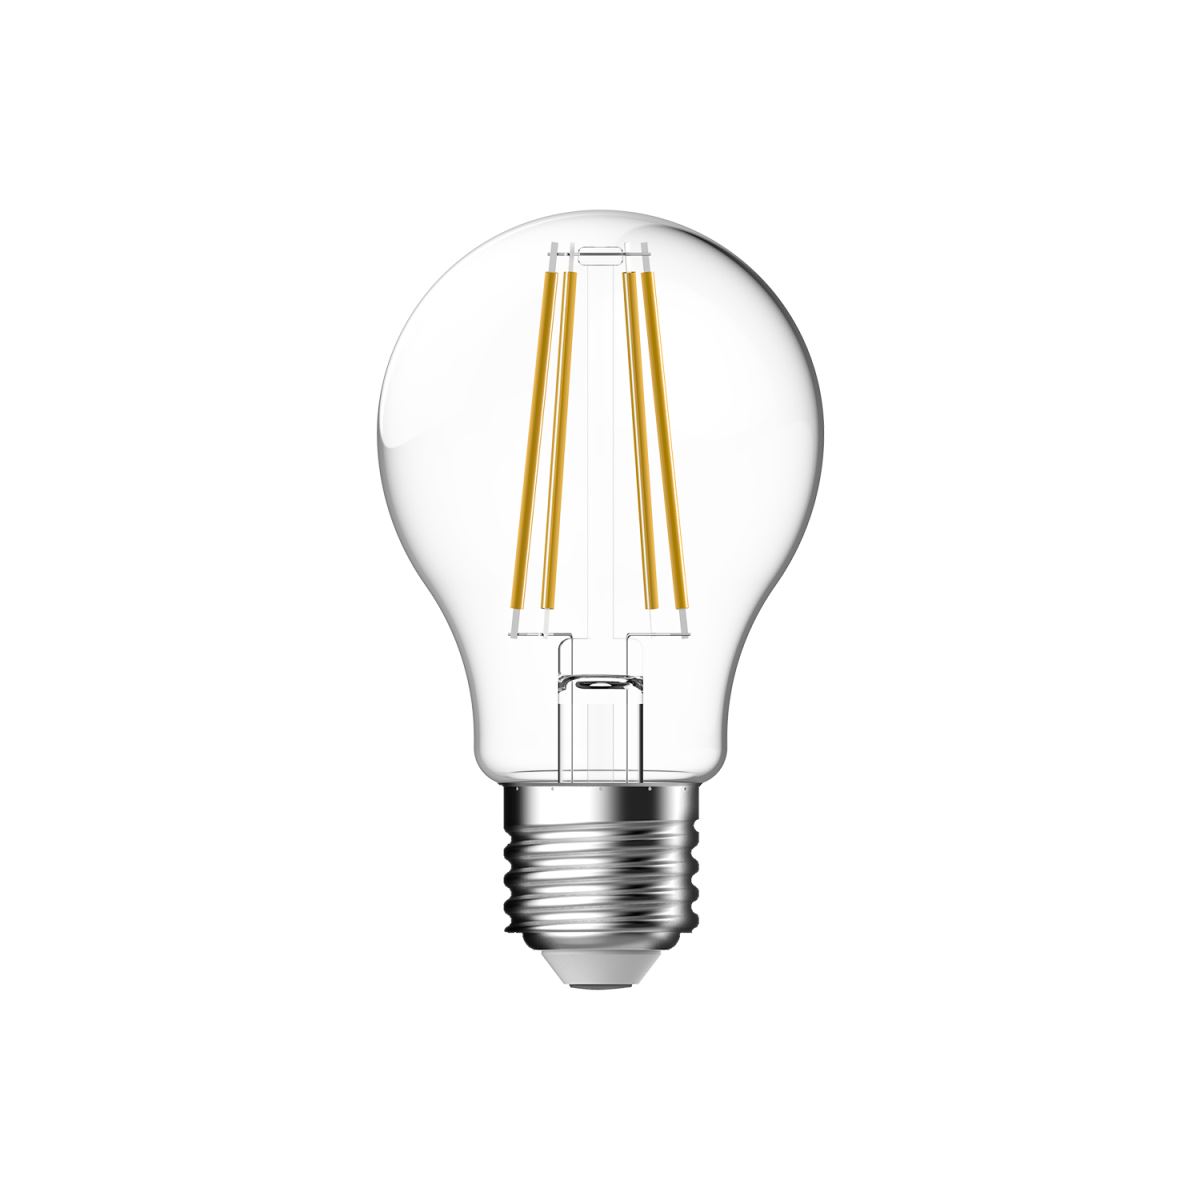 Nordlux Energetic LED Leuchtmittel E27 Filament klar 1055lm 4000K 7,8W 80Ra 360° dimmbar 6x6x10,4cm von Energetic